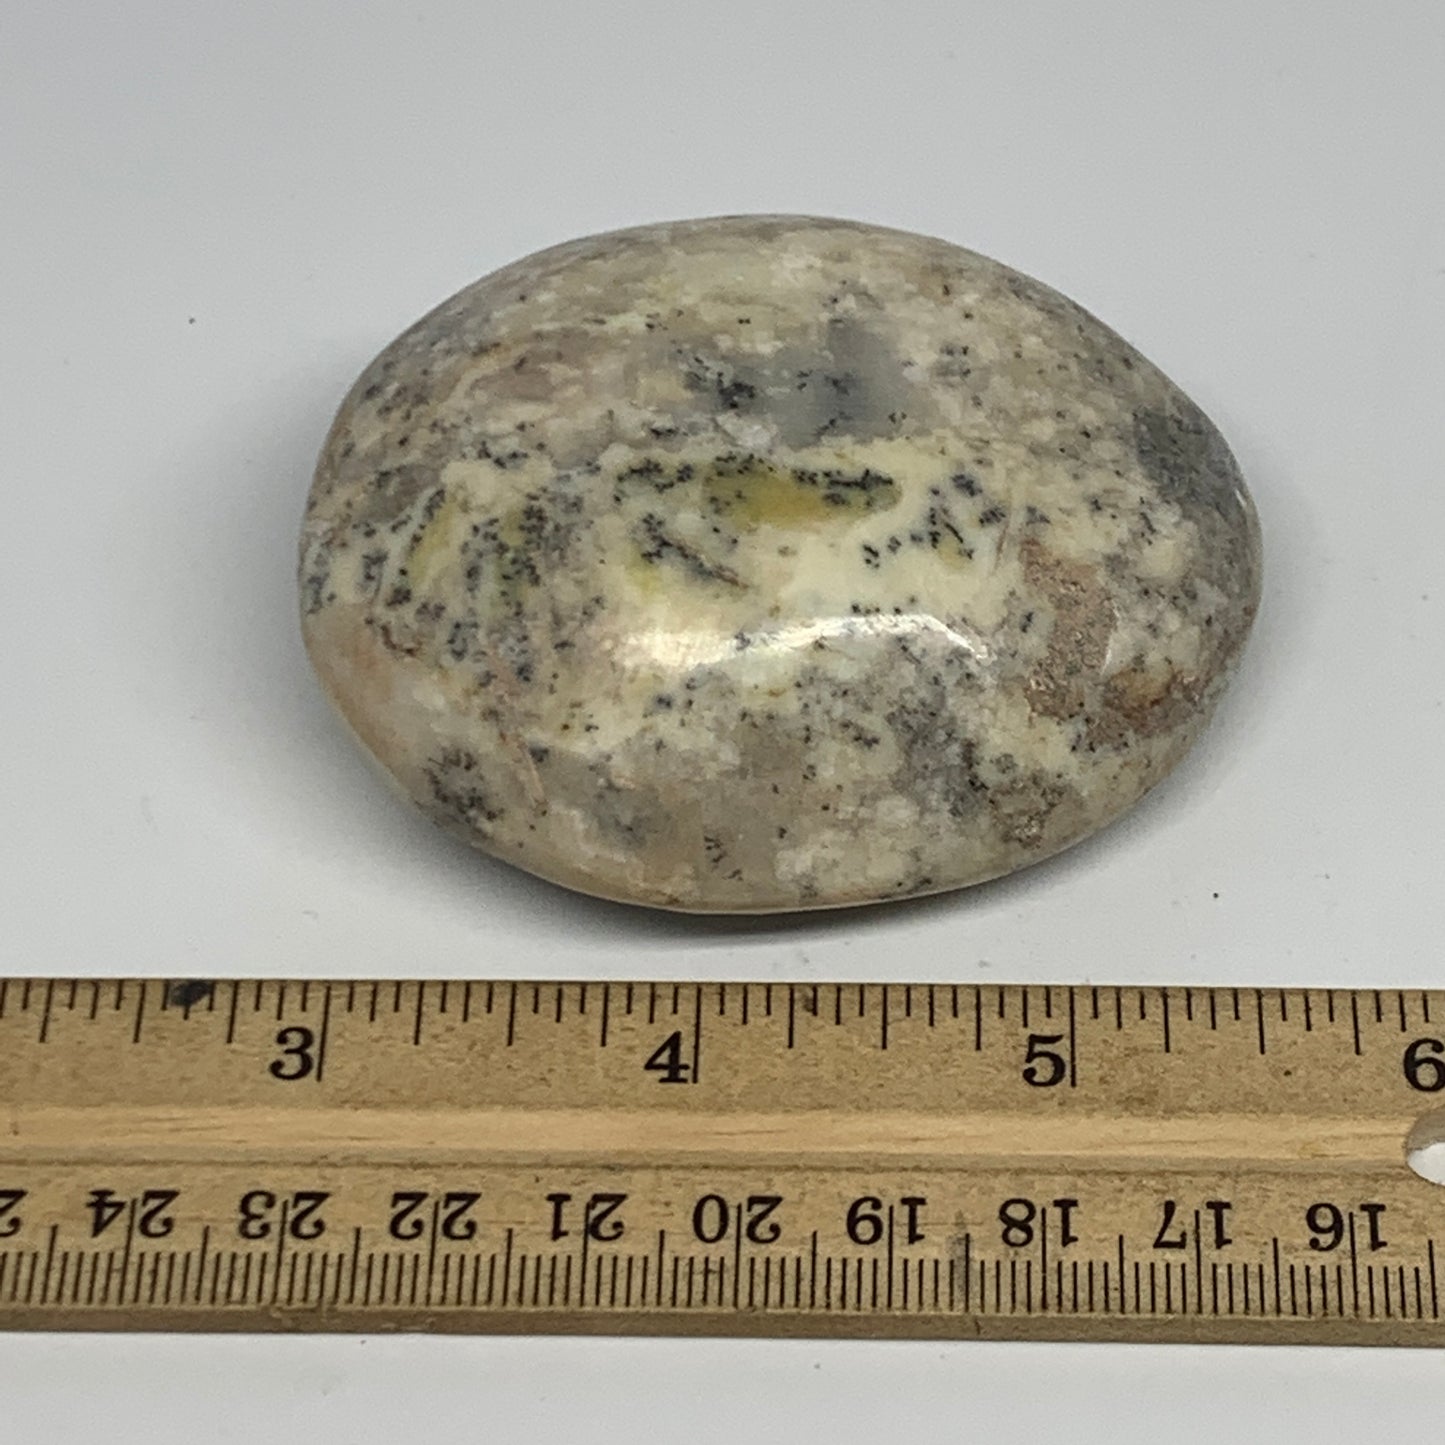 139.4g, 2.7"x2.2"x1.2" Dendrite Fern Agate Palm-Stone Reiki Energy Crystal Reiki